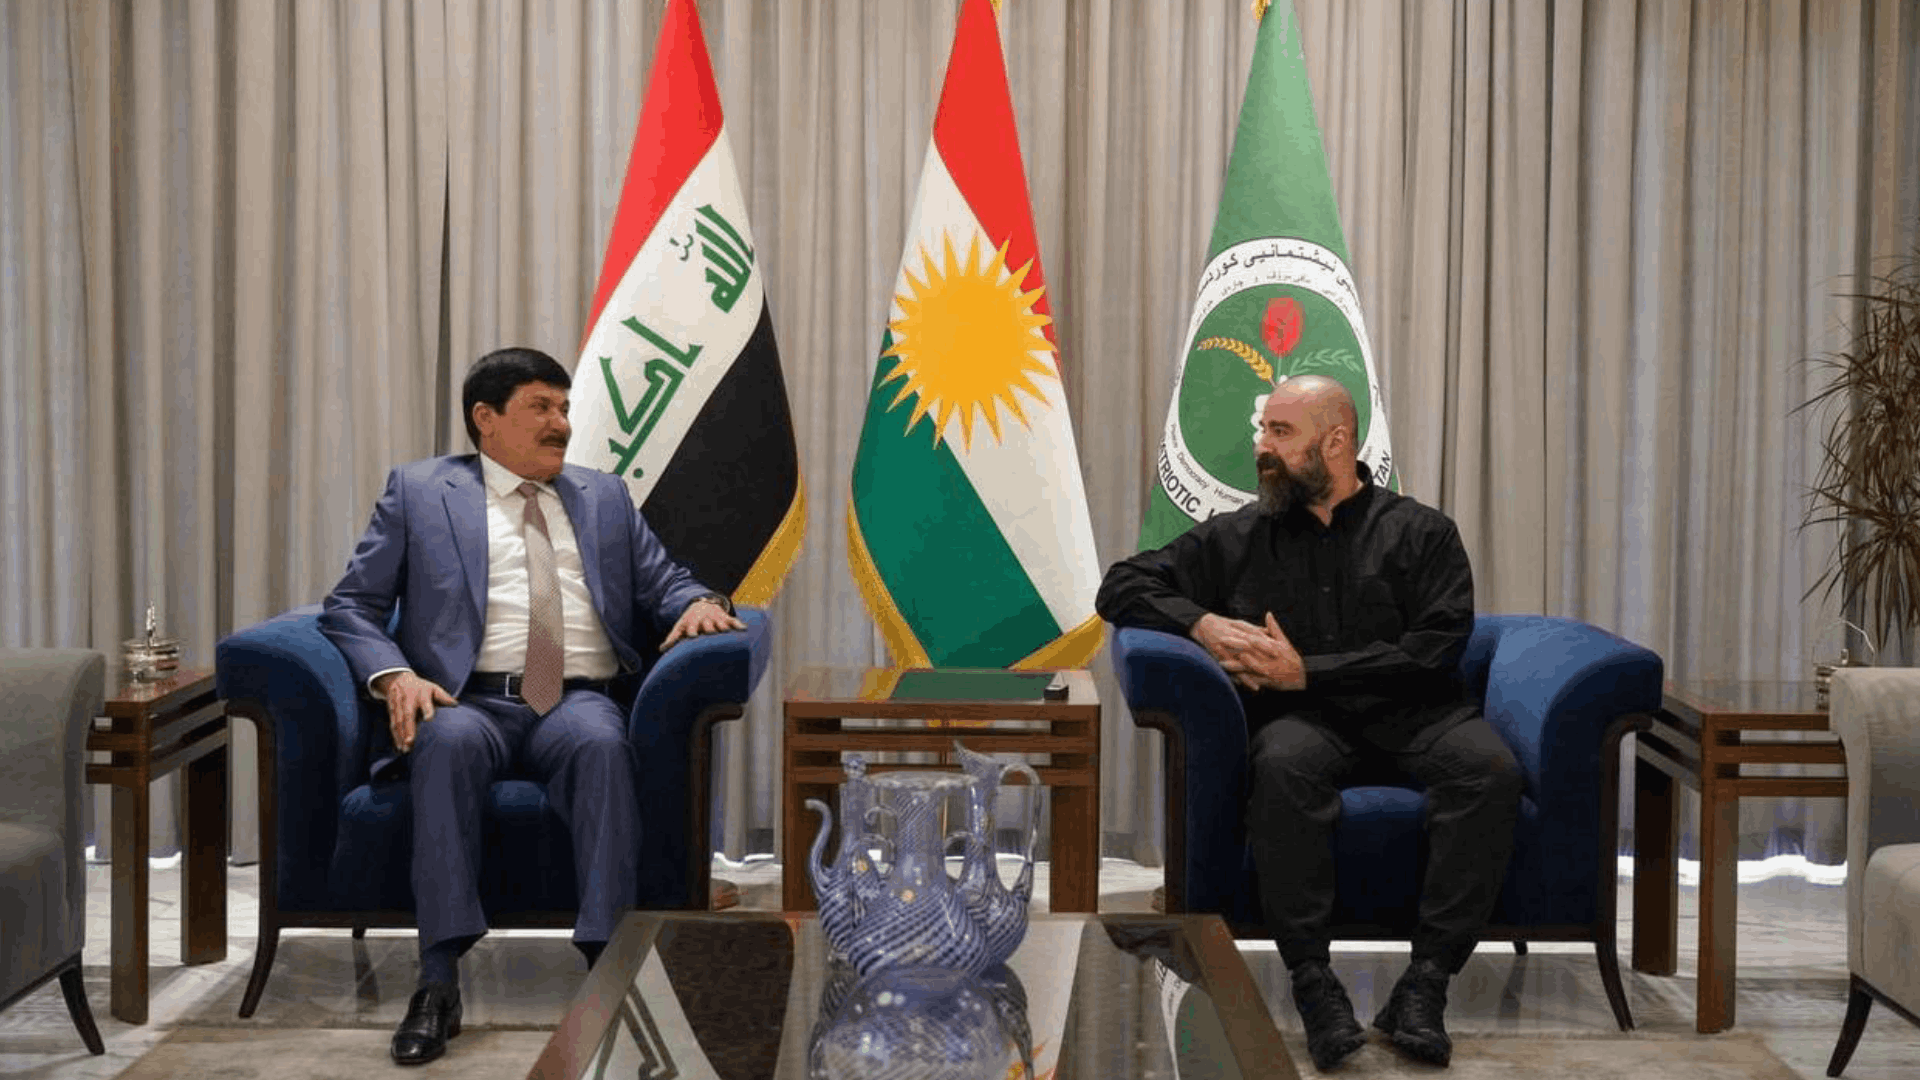  PUK President meets Syrian Ambassador in Baghdad